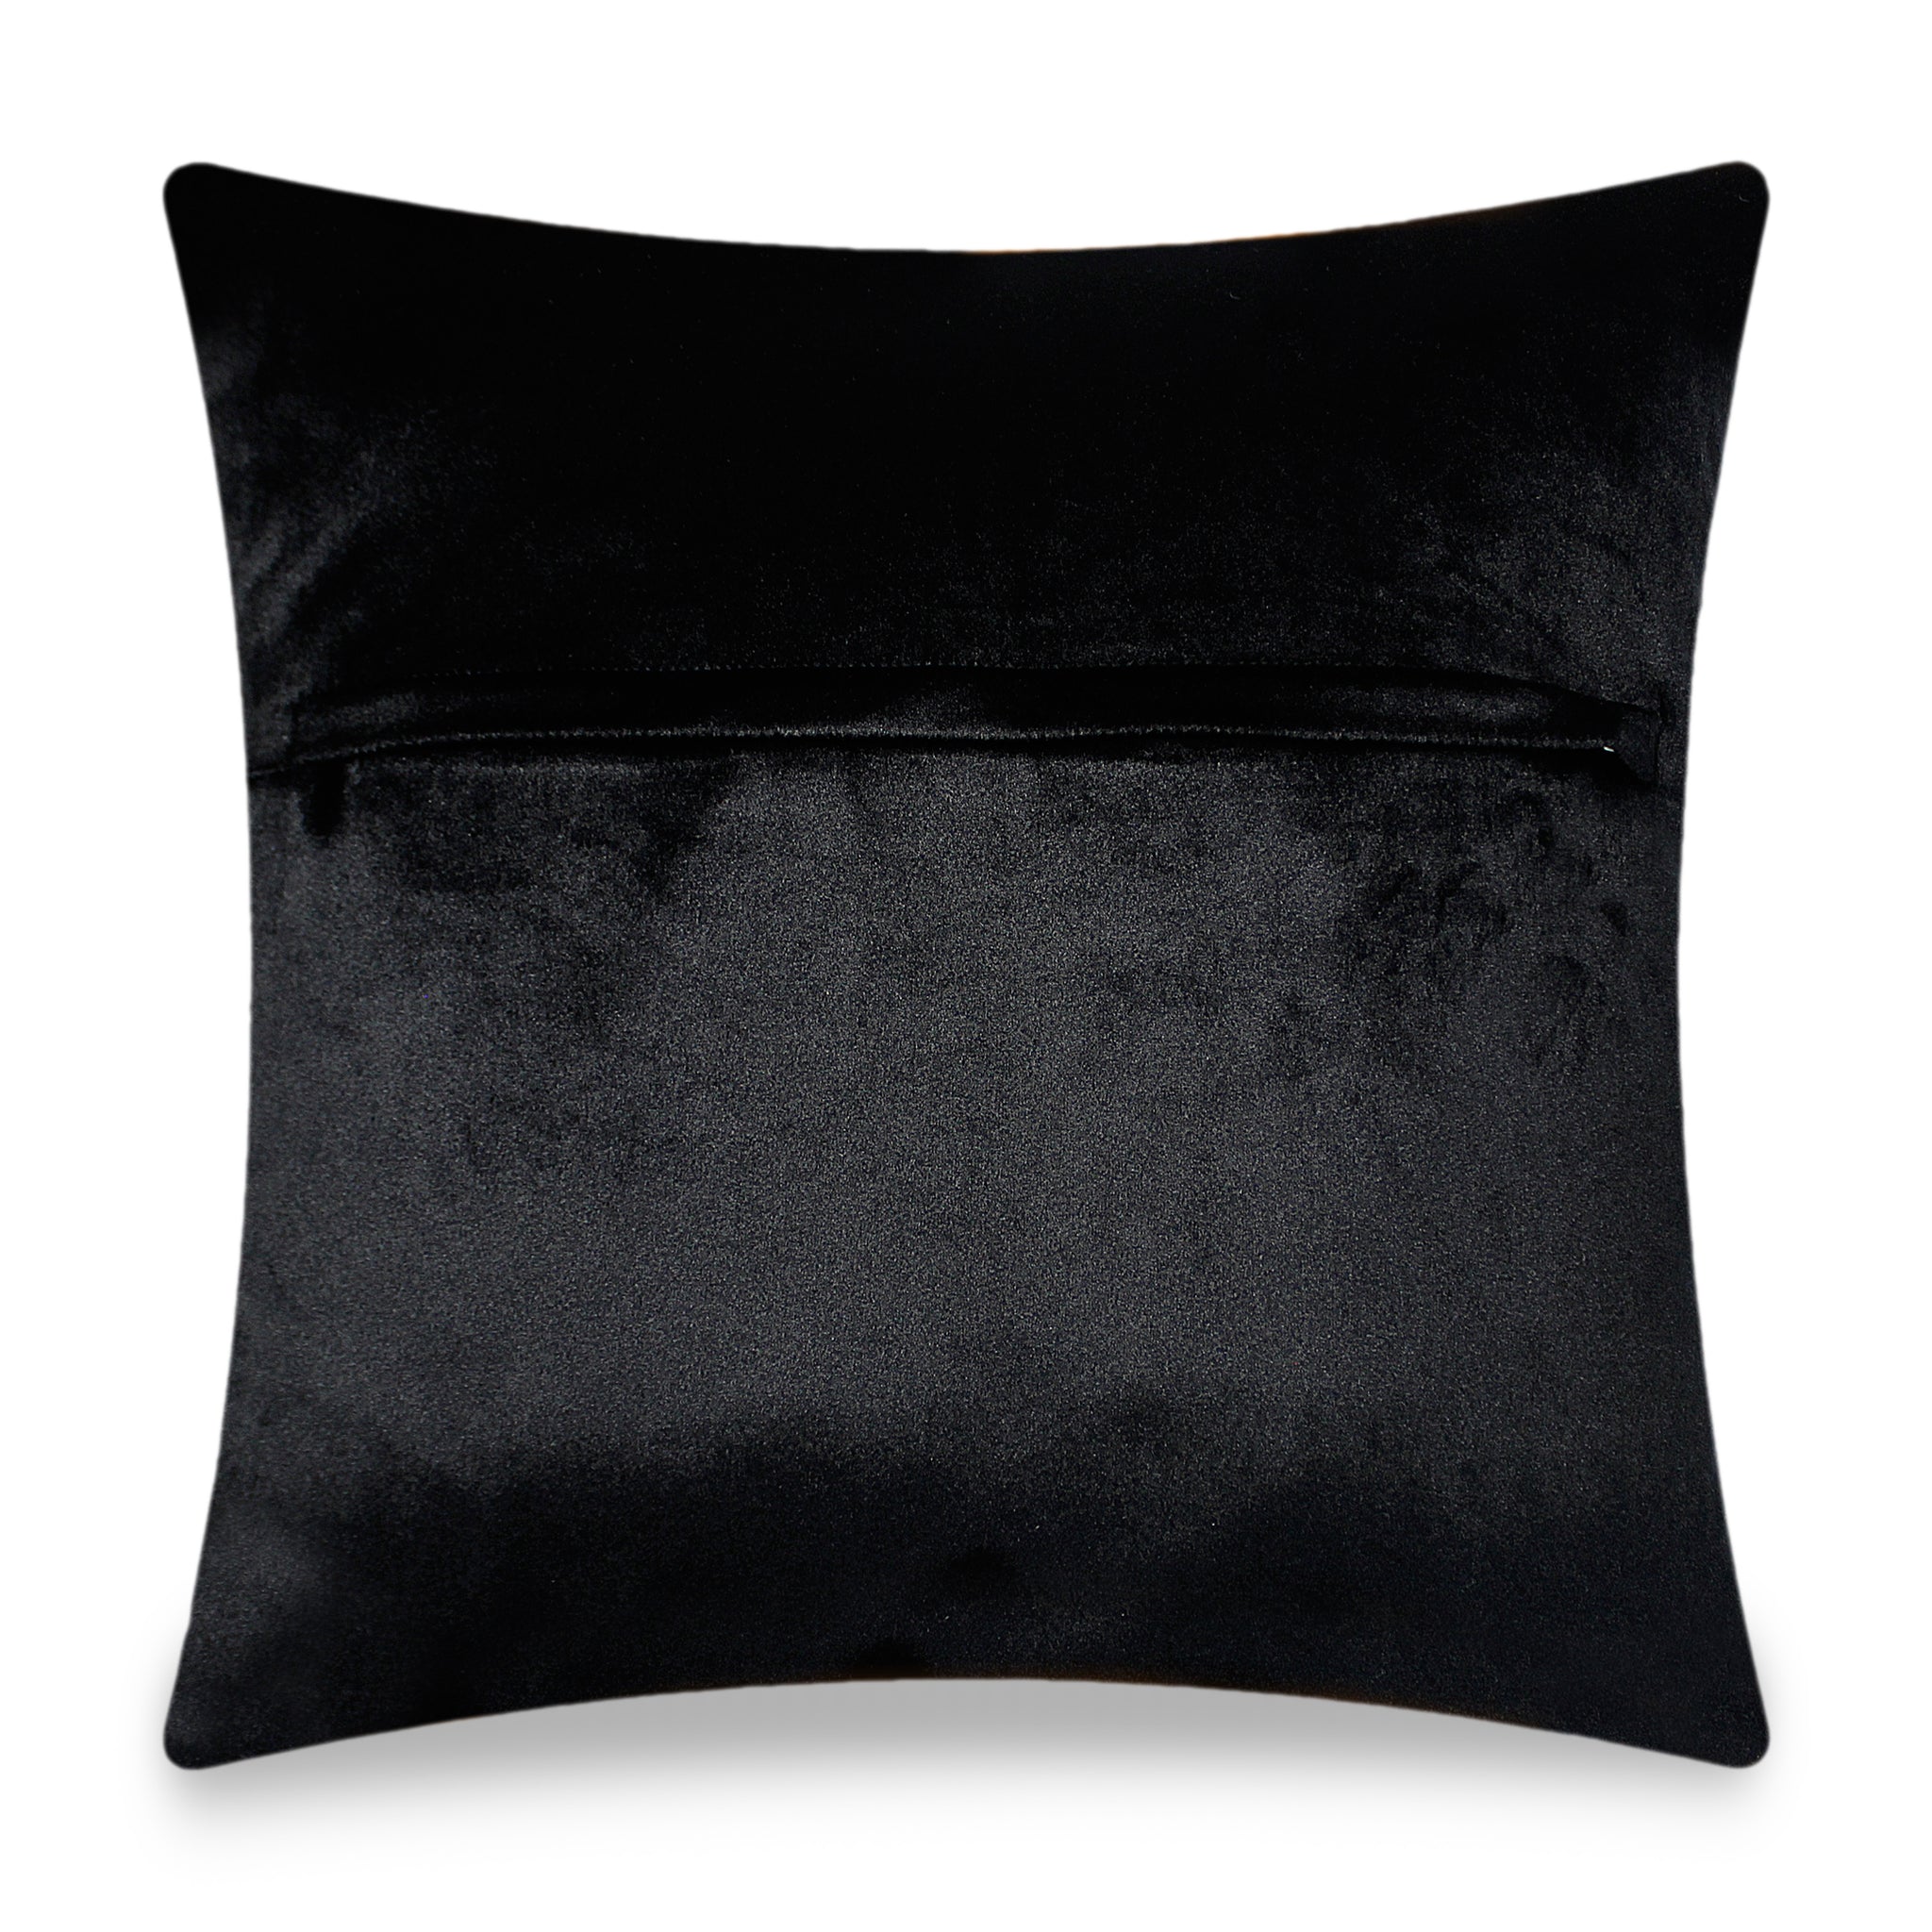  Velvet Cushion Cover Tiger Face Decorative Pillowcase Modern Home Decor Throw Pillow for Sofa Chair 45x45 cm 